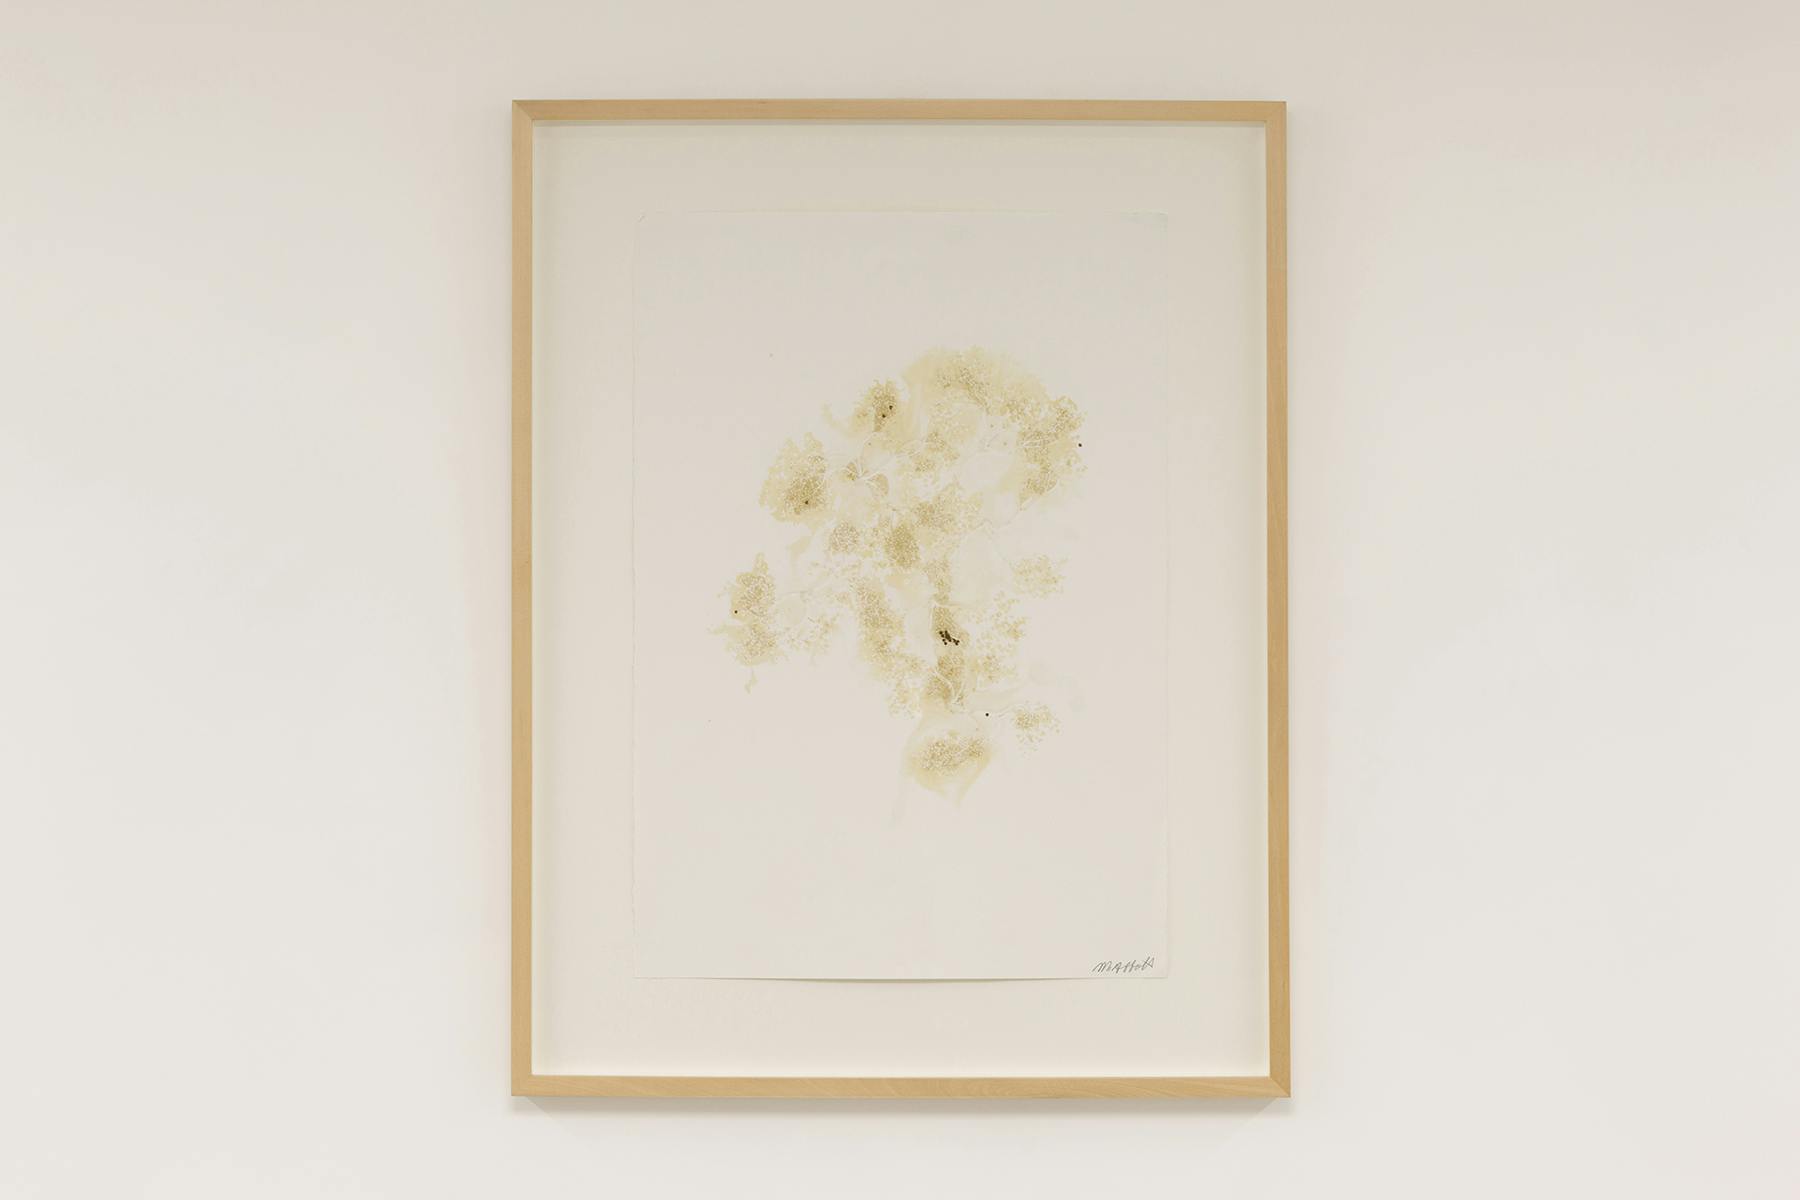 Elderflower and Venus 1, 2021, monostampa, fiori di sambuco su carta, 72 x 56 cm